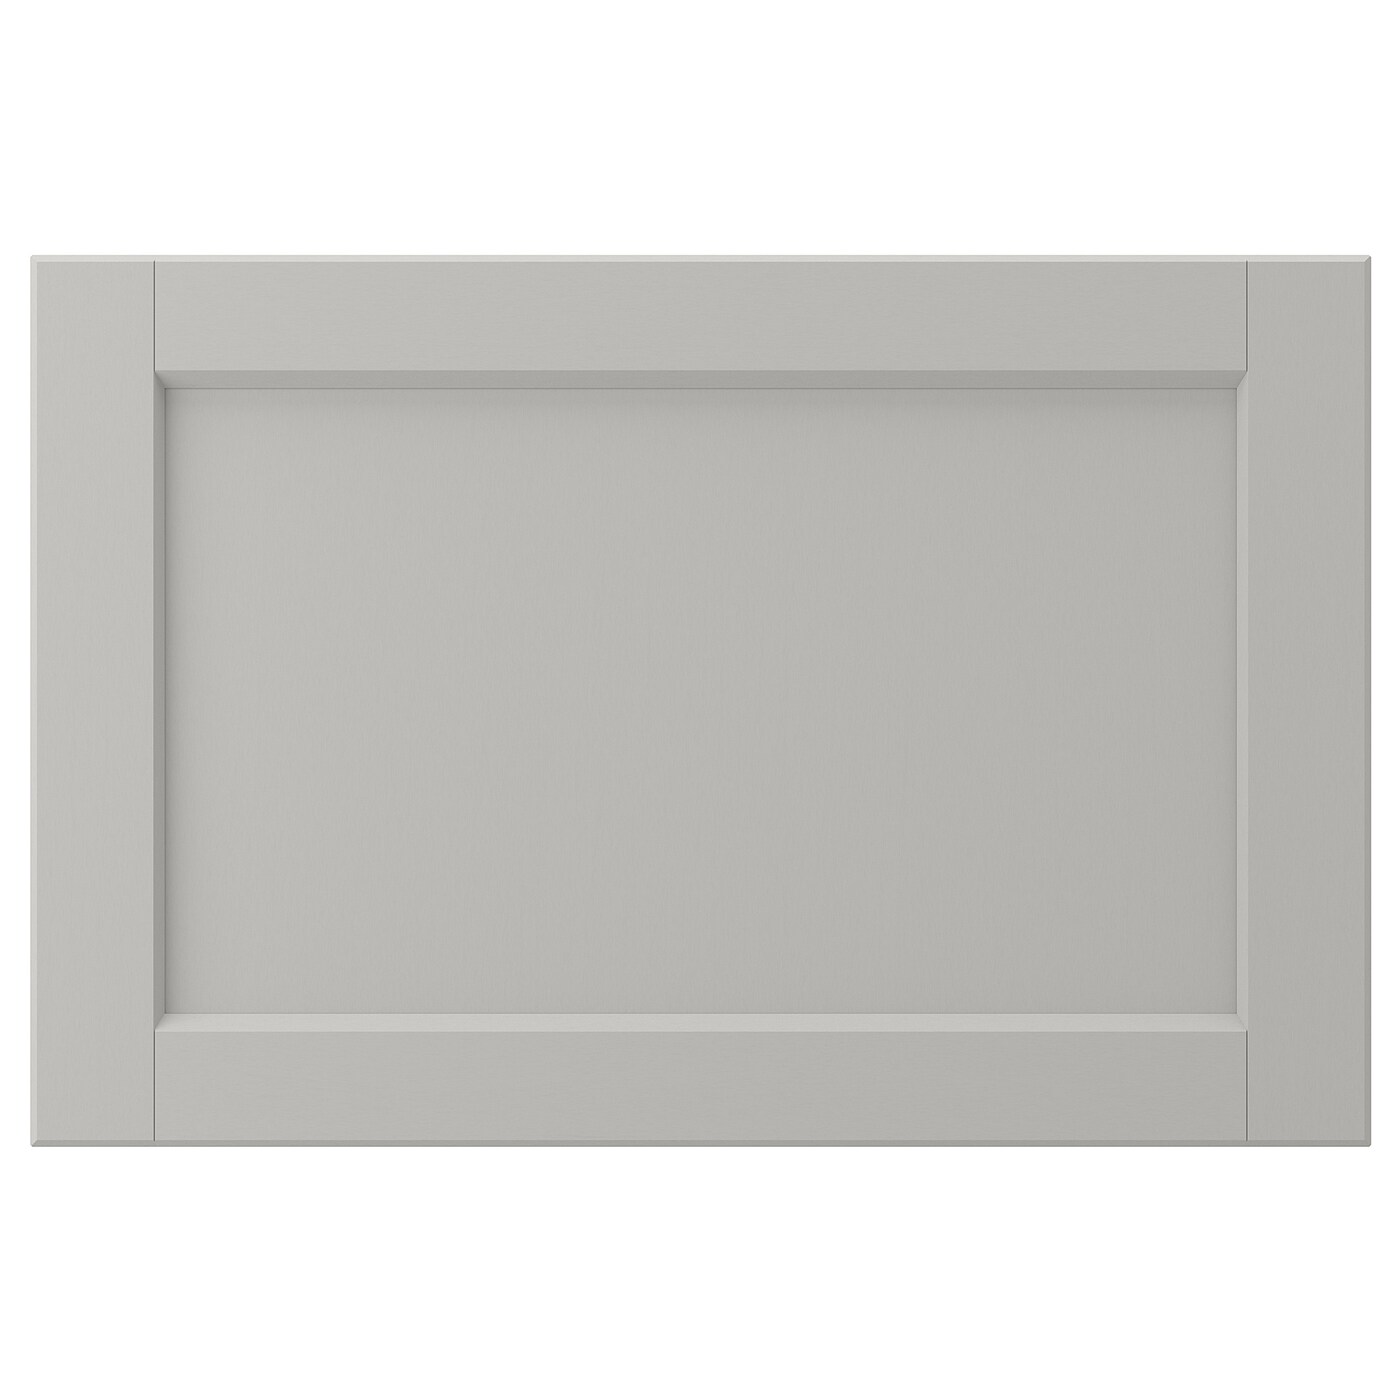 Дверца - IKEA LERHYTTAN, 40х60 см, светло-серый, ЛЕРХЮТТАН ИКЕА